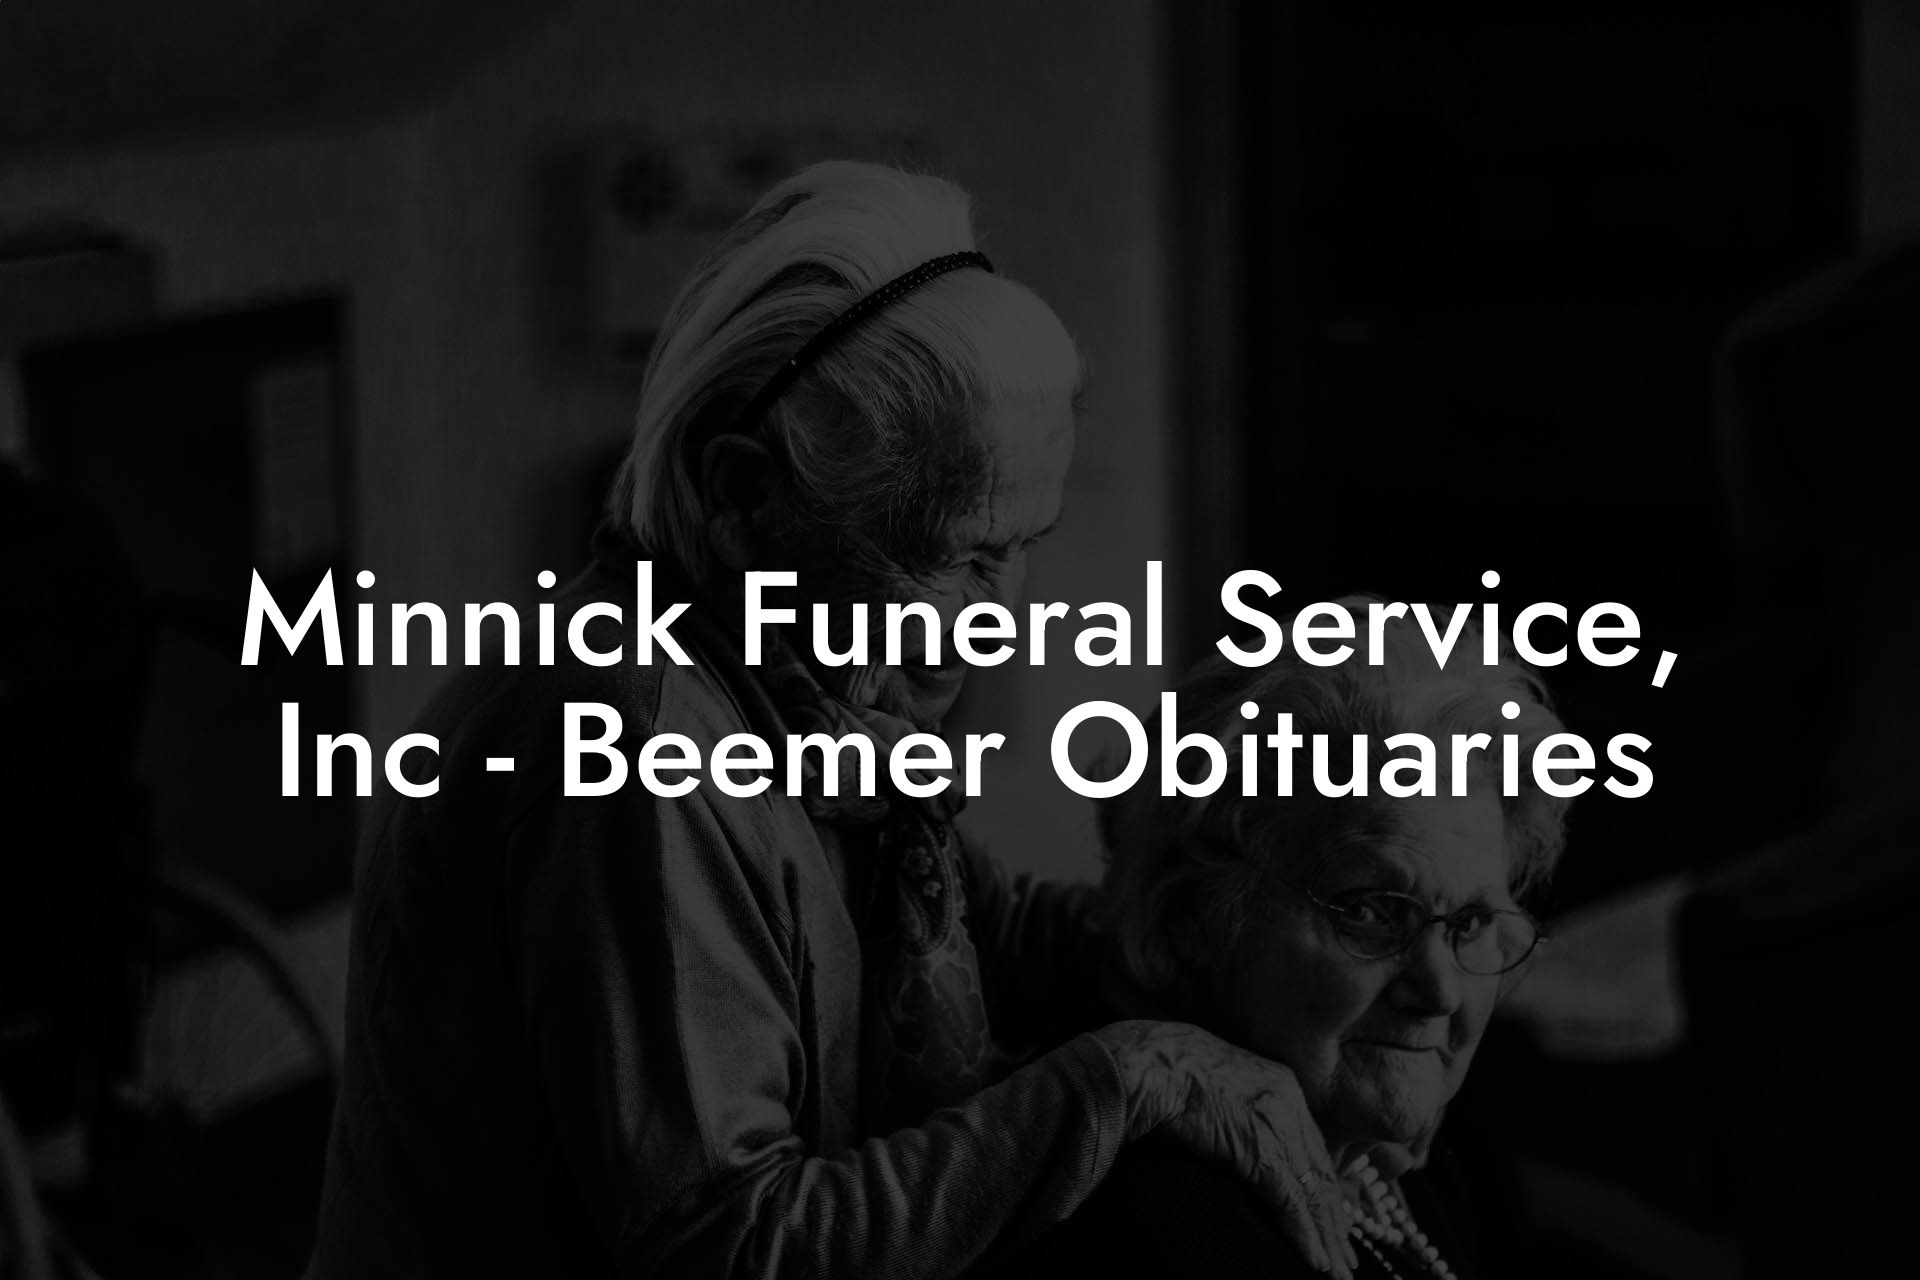 Minnick Funeral Service, Inc - Beemer Obituaries